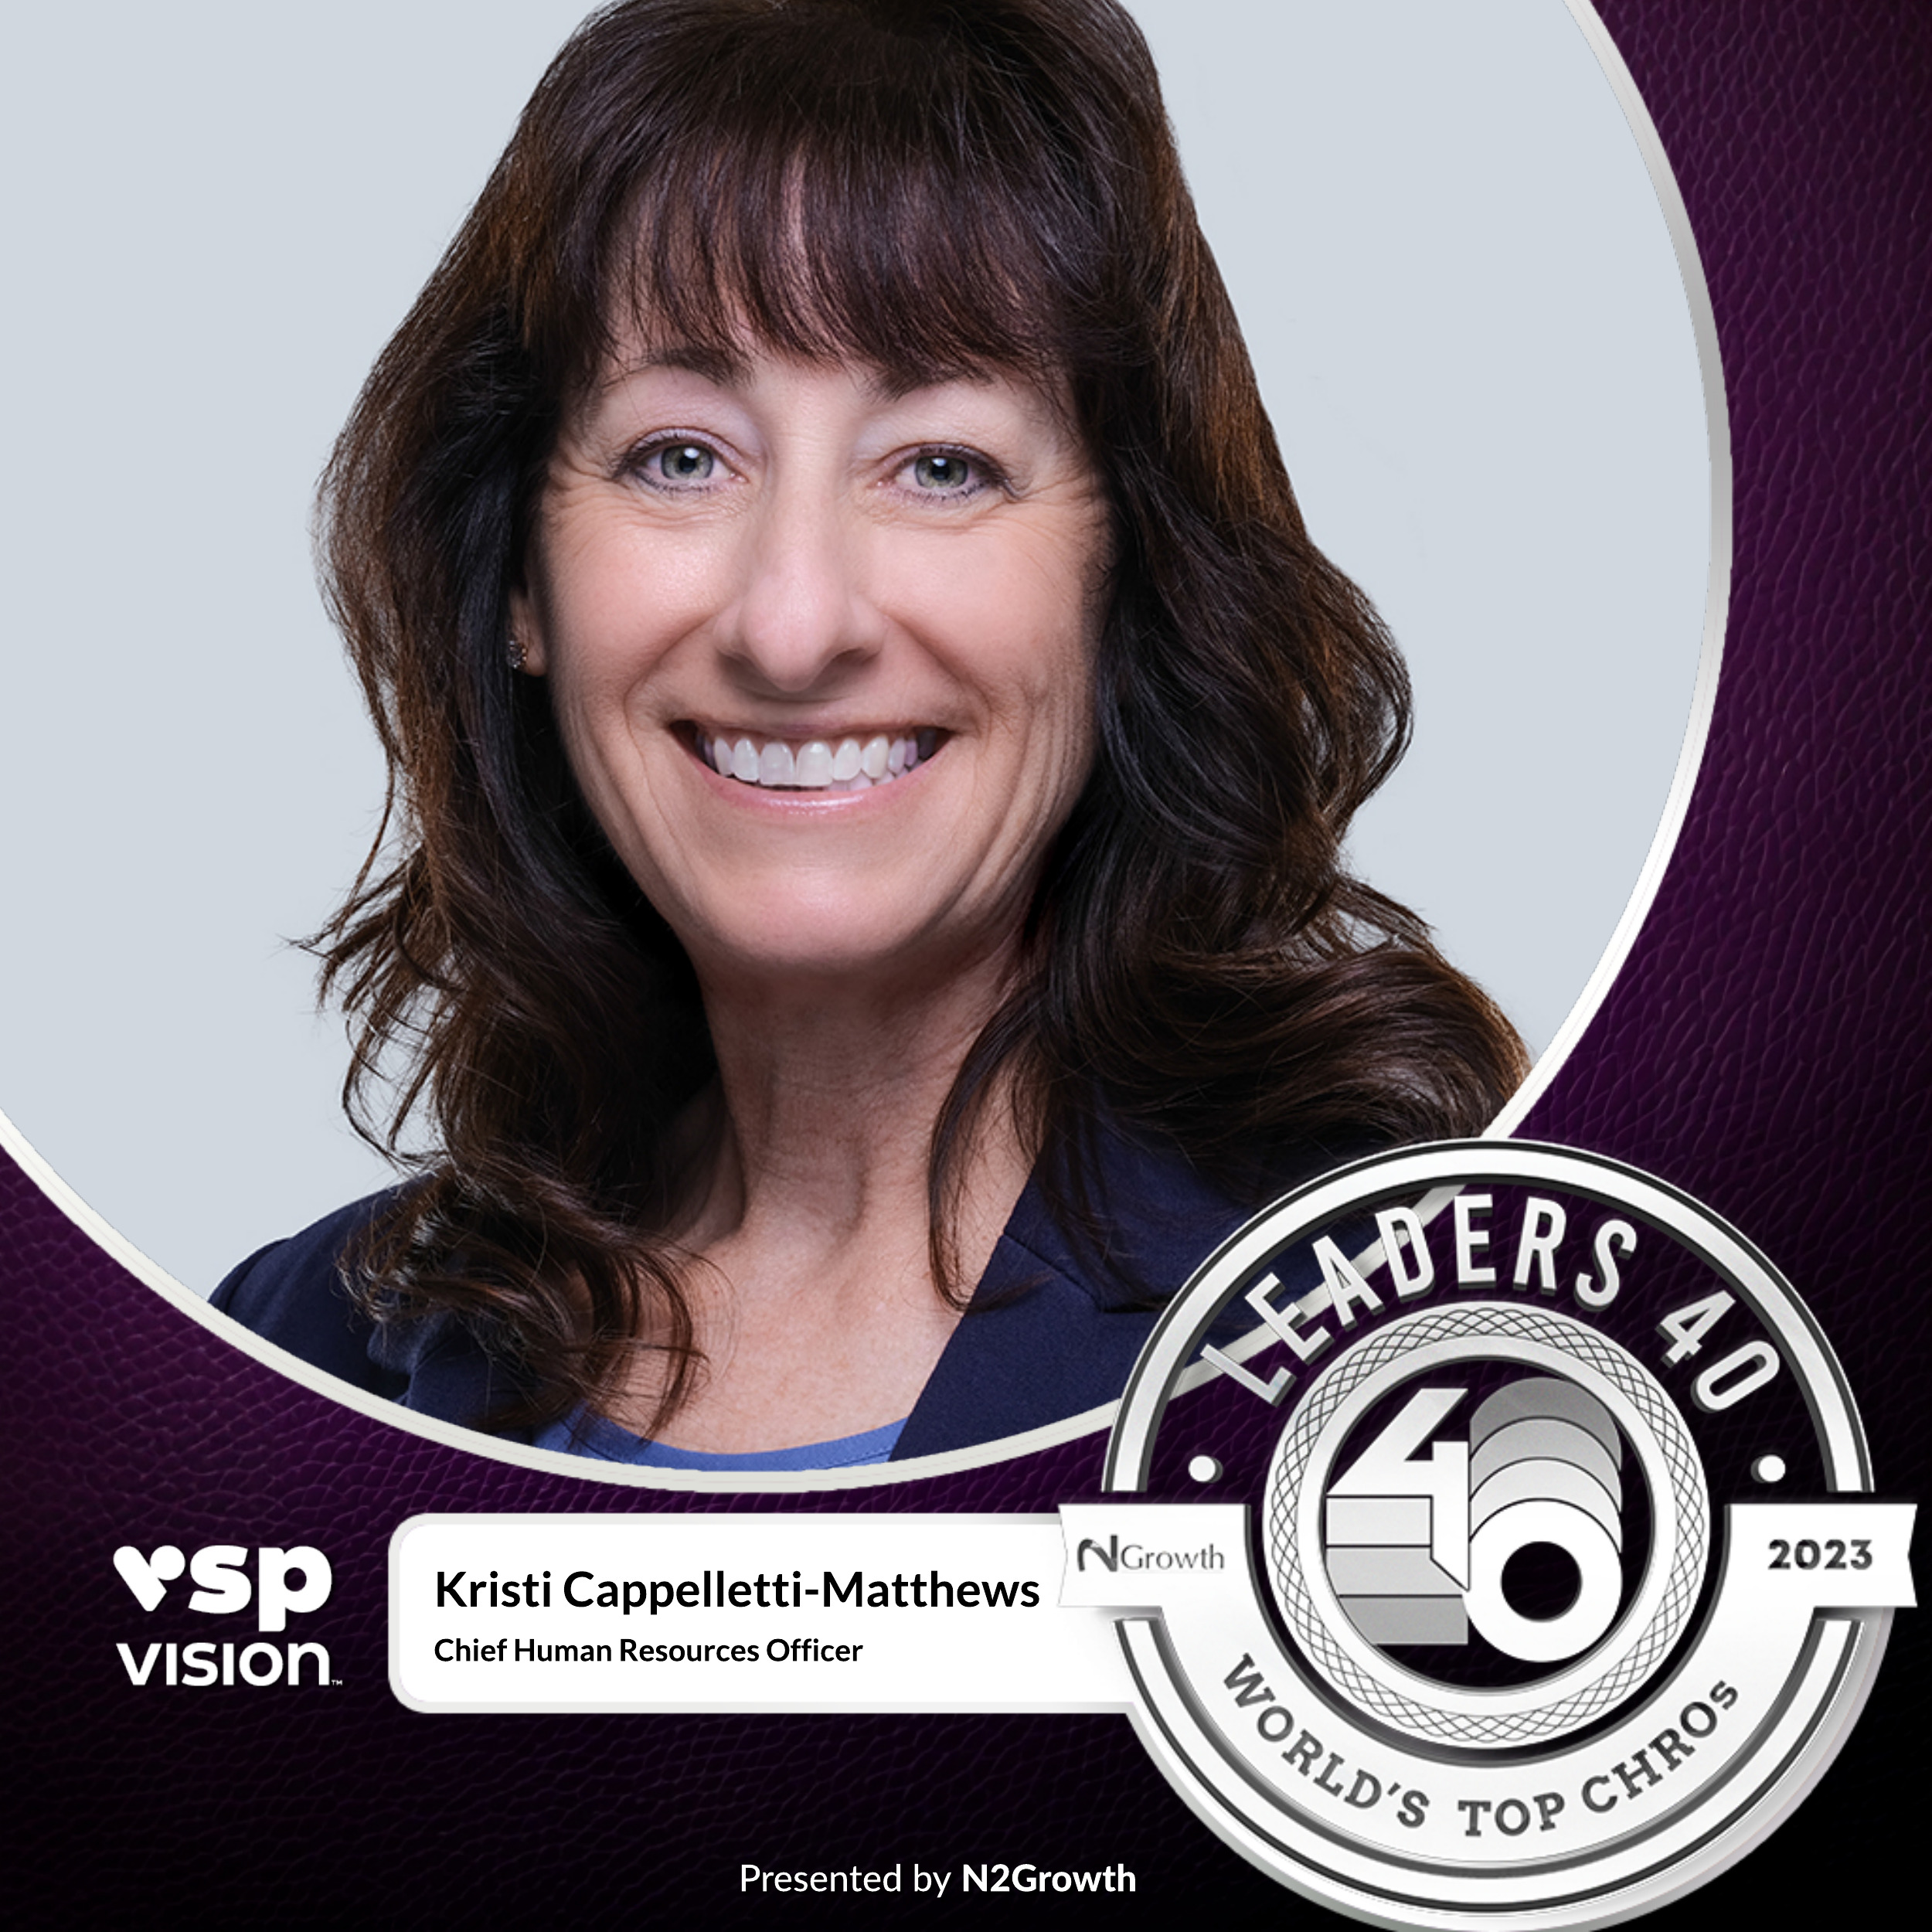 VSP Vision Celebrates Kristi Cappelletti-Matthews’ Recognition in N2GROWTH’S Top Chro Award